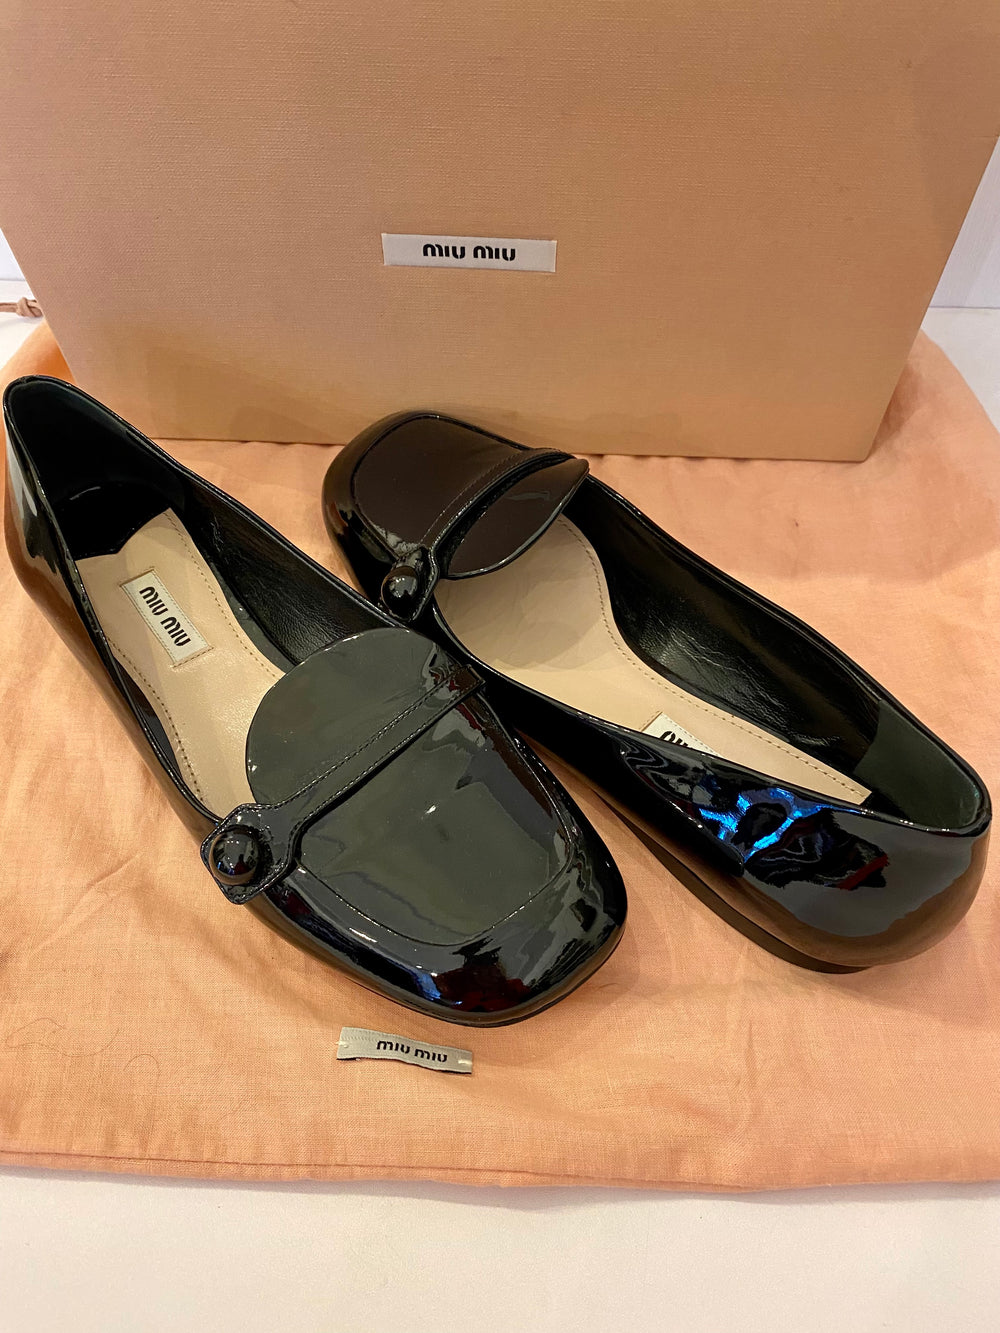 Miu Miu Black Patent Flat Shoes uk5 (new)